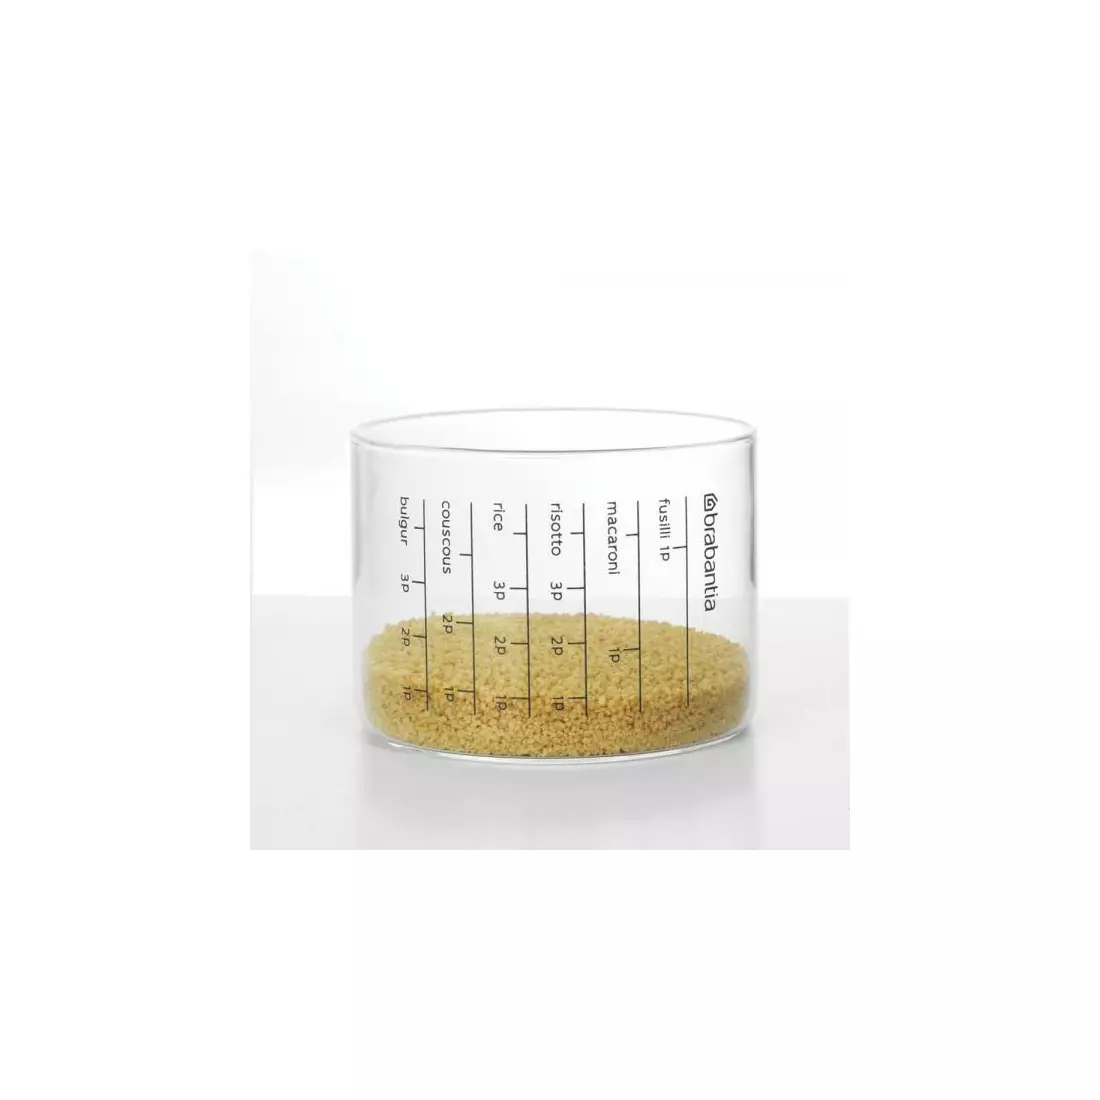 BRABANTIA glass measuring cup 1L, mint